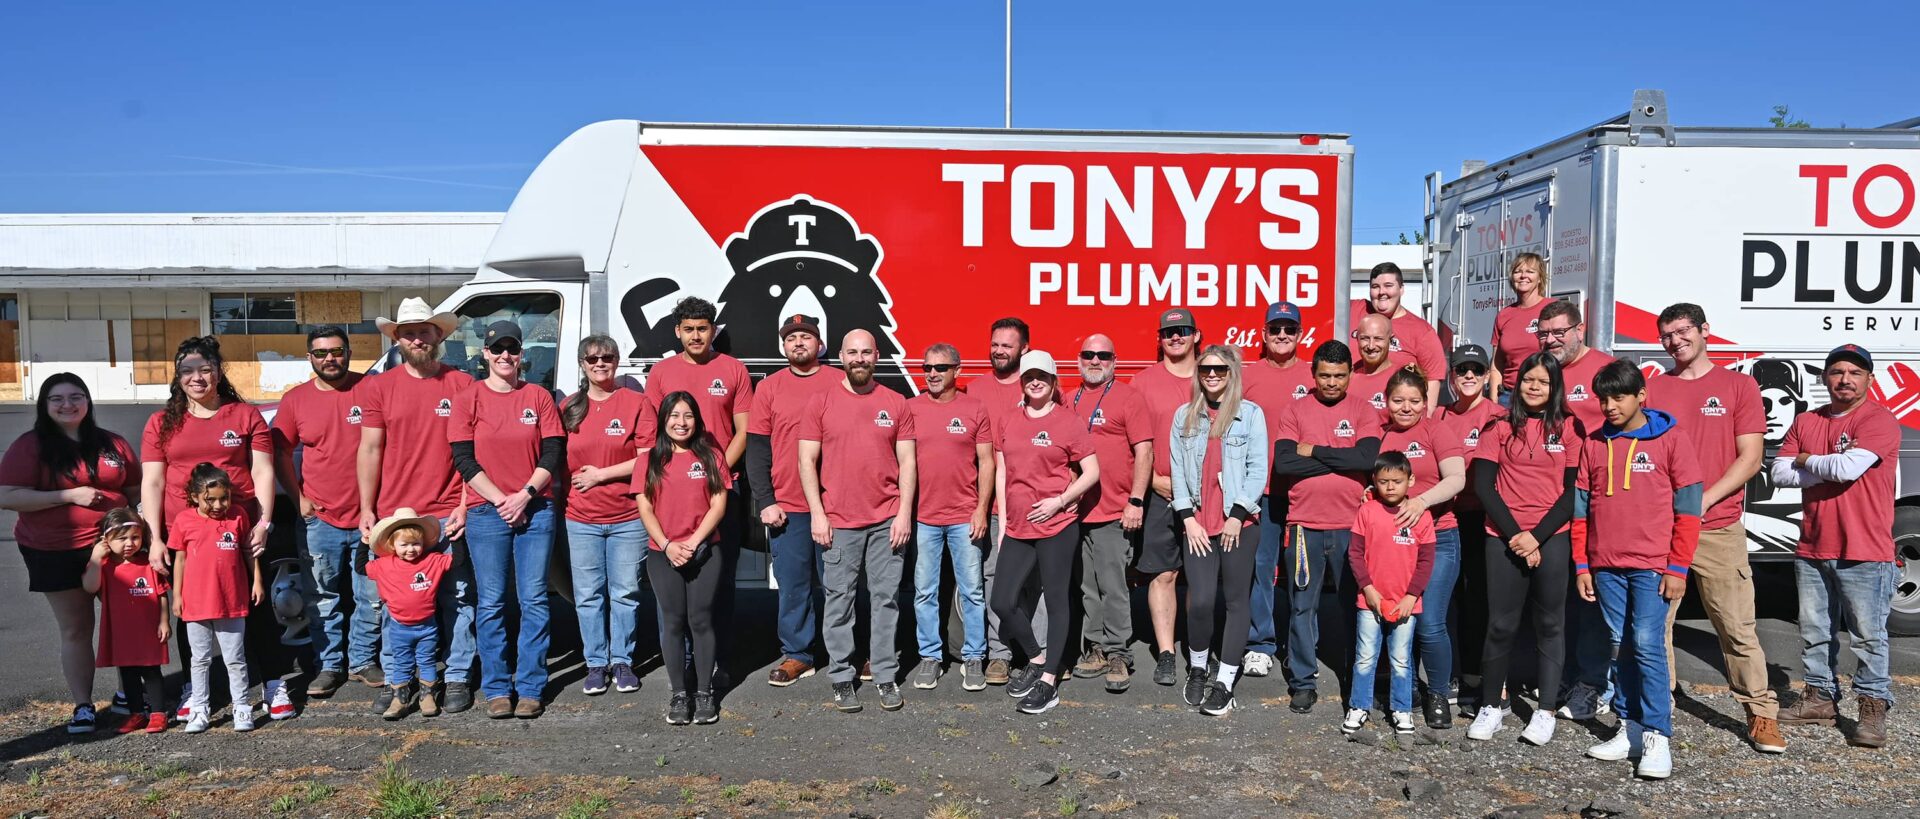 Tonys Plumbing team volunteering in the community.